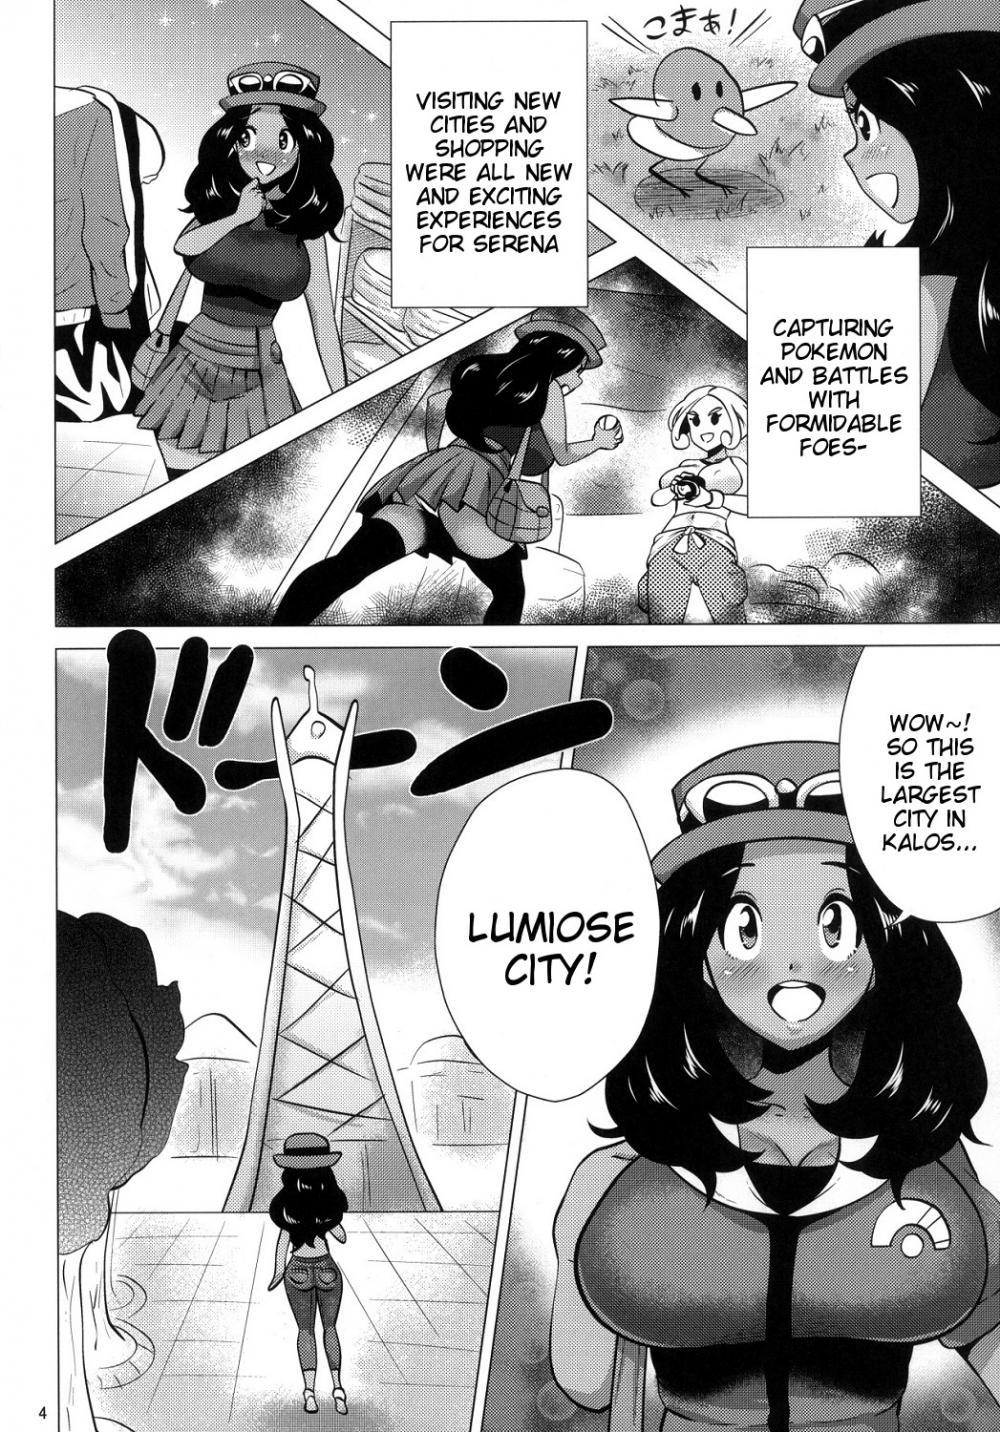 Sucks Mega Bitch Serena - Pokemon Rub - Page 4